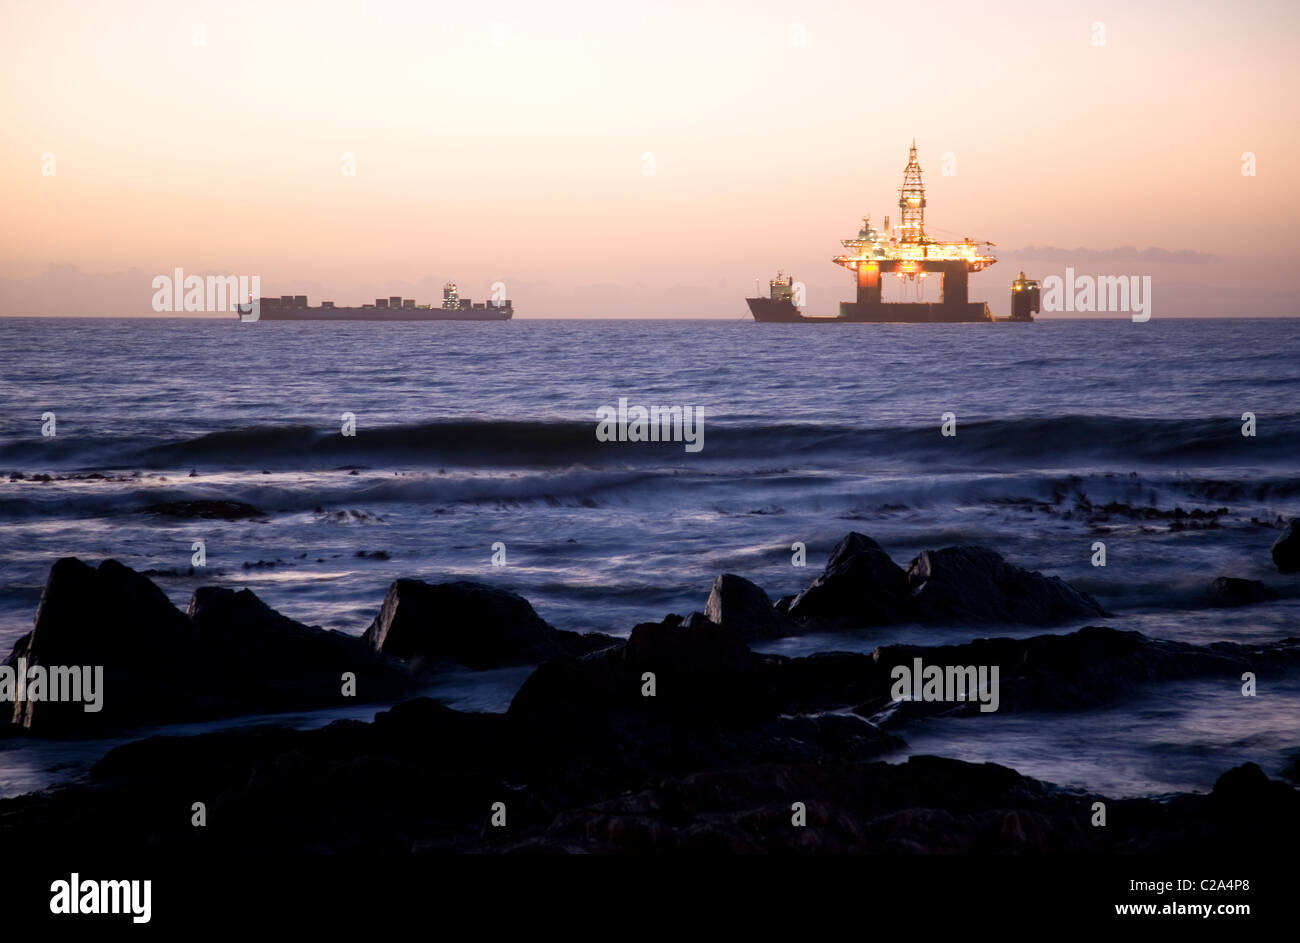 Illuminated Oil Rig Off shore in Cape Town Stock Photo